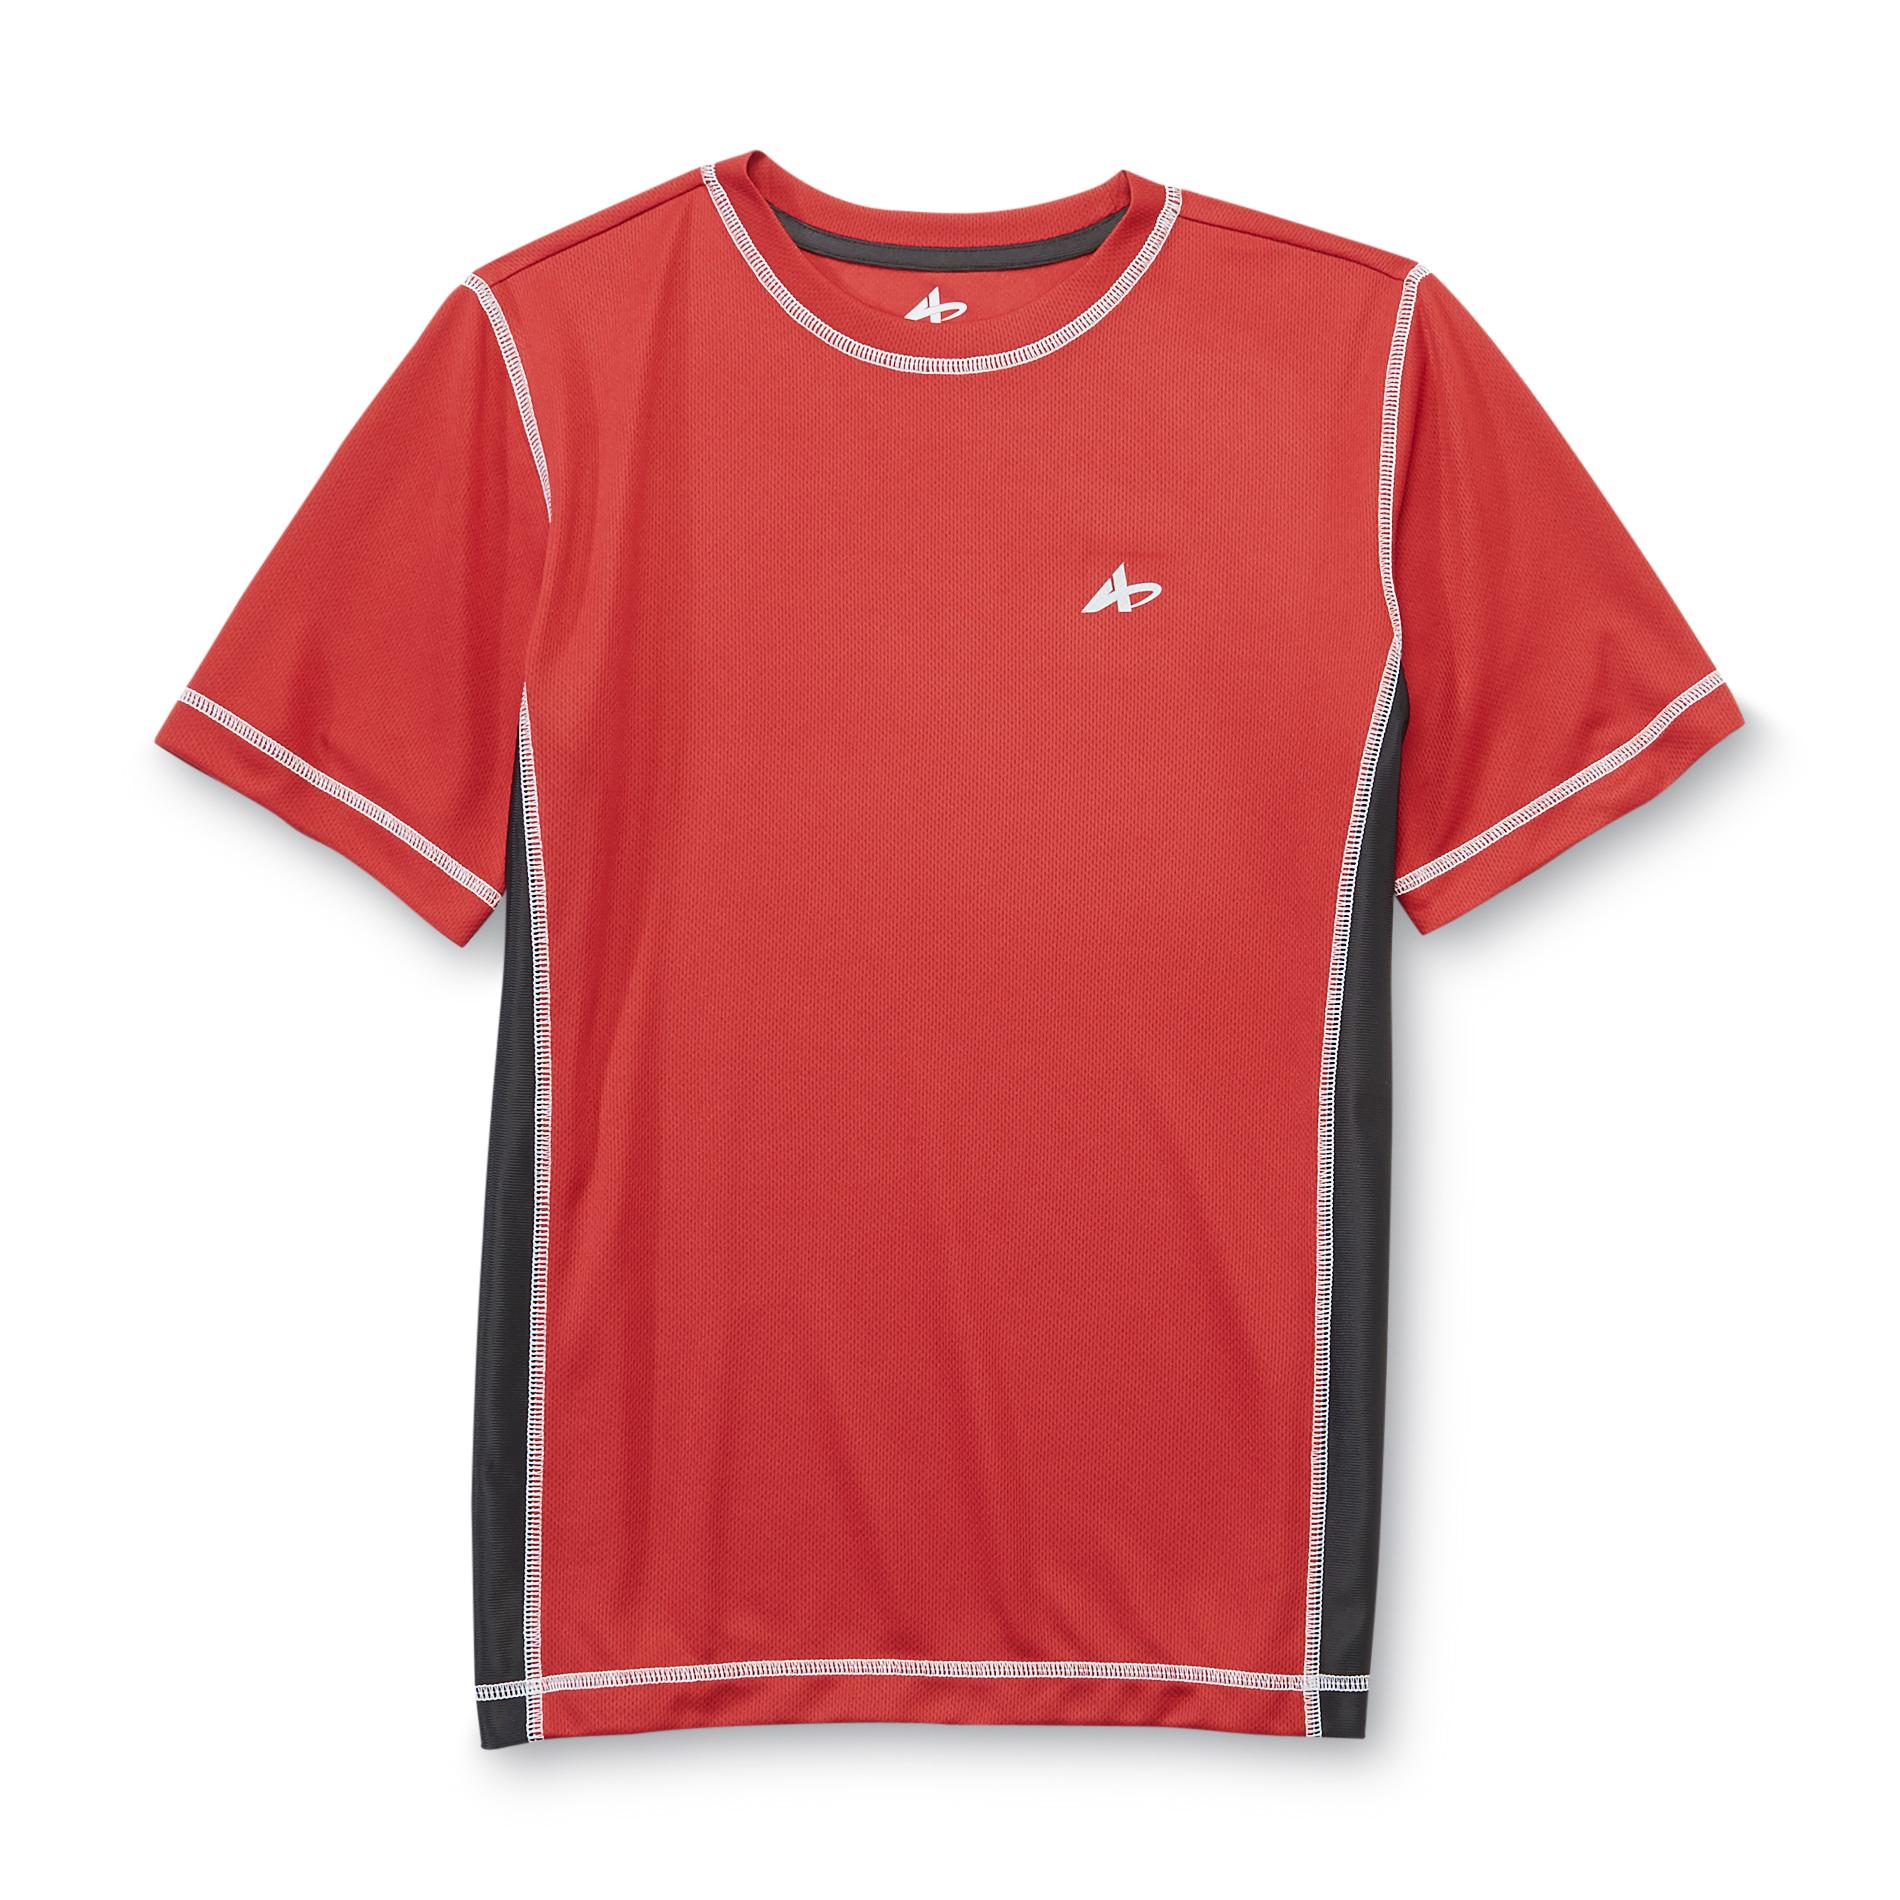 Athletech Boy's Mesh Athletic T-Shirt